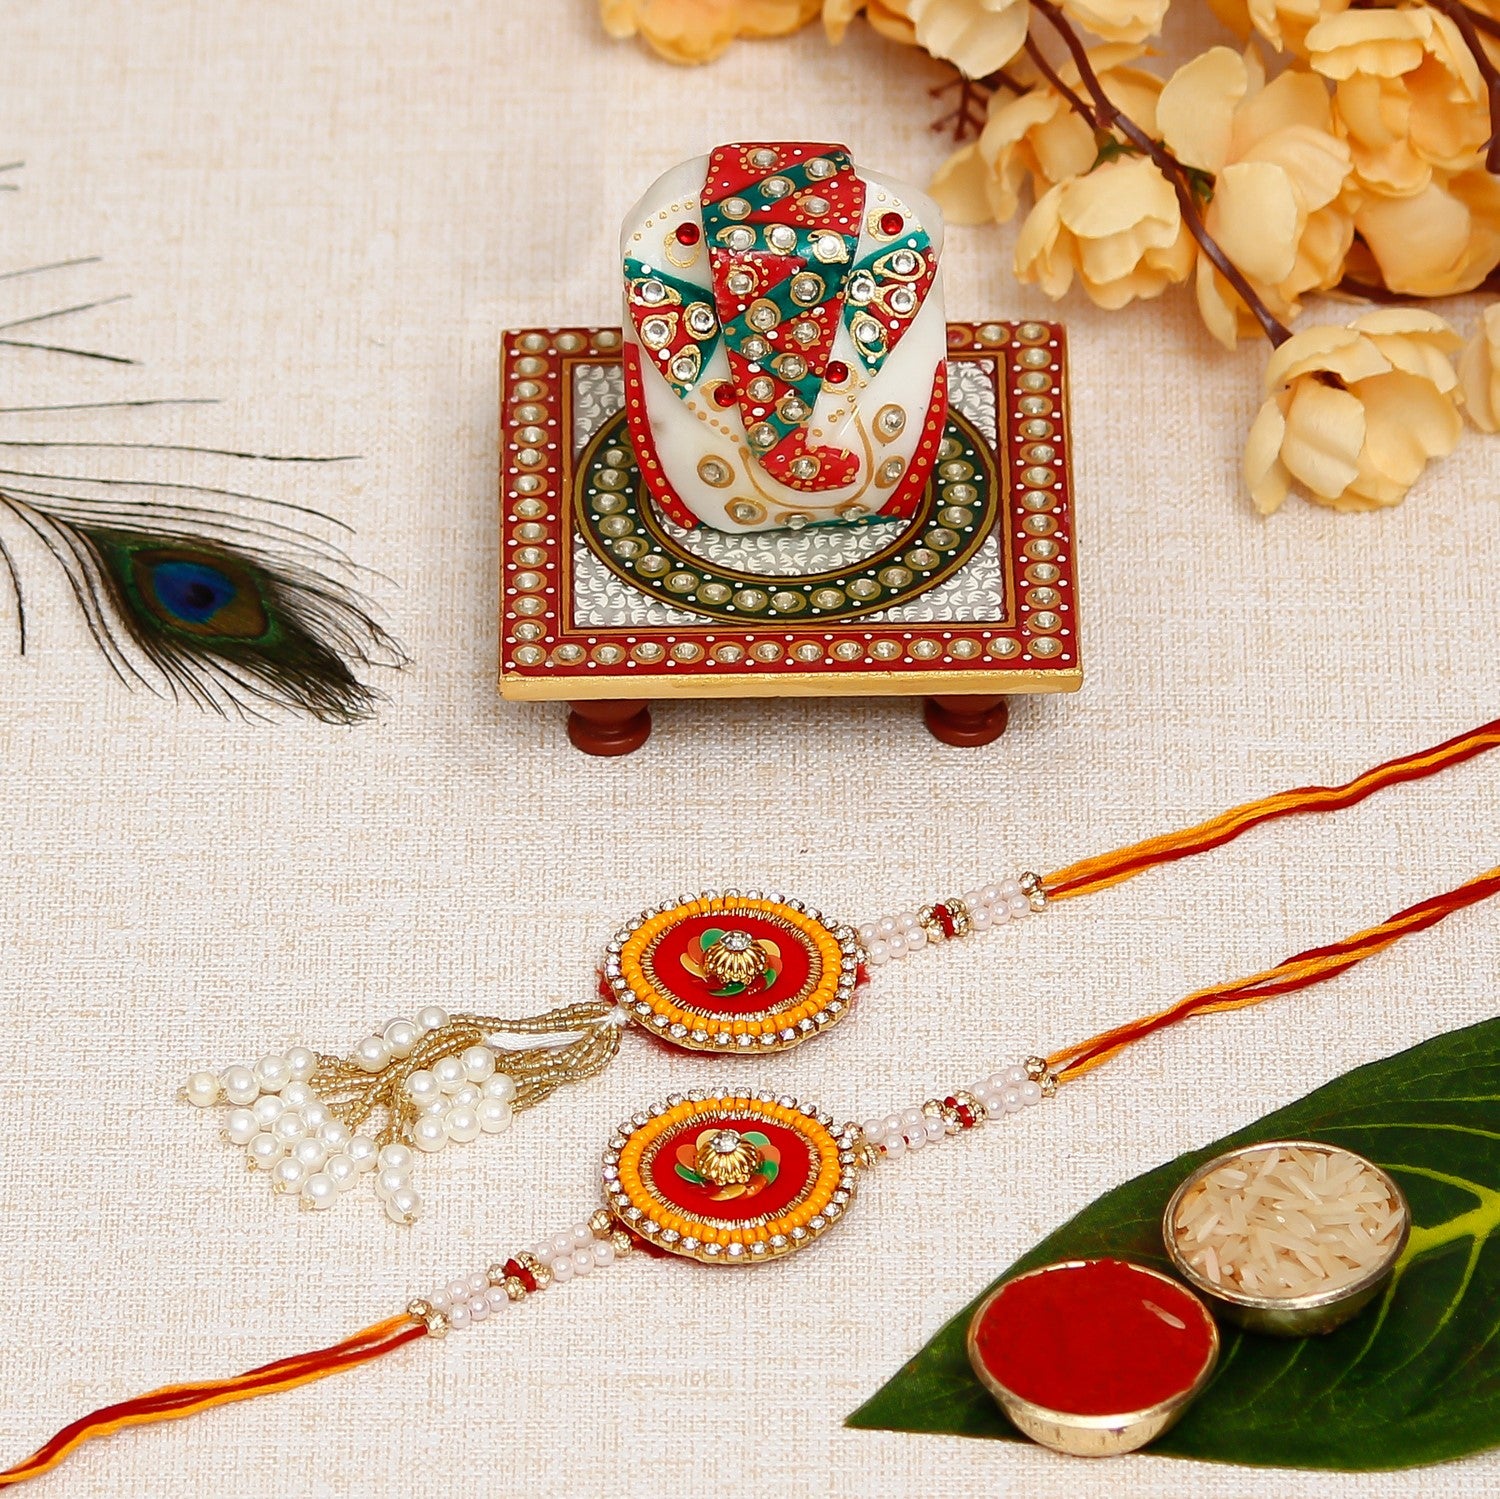 Designer Handcrafted Premium Bhaiya Bhabhi Rakhi with Lord Ganesha on Kundan Studded Marble Chowki and Roli Chawal Pack